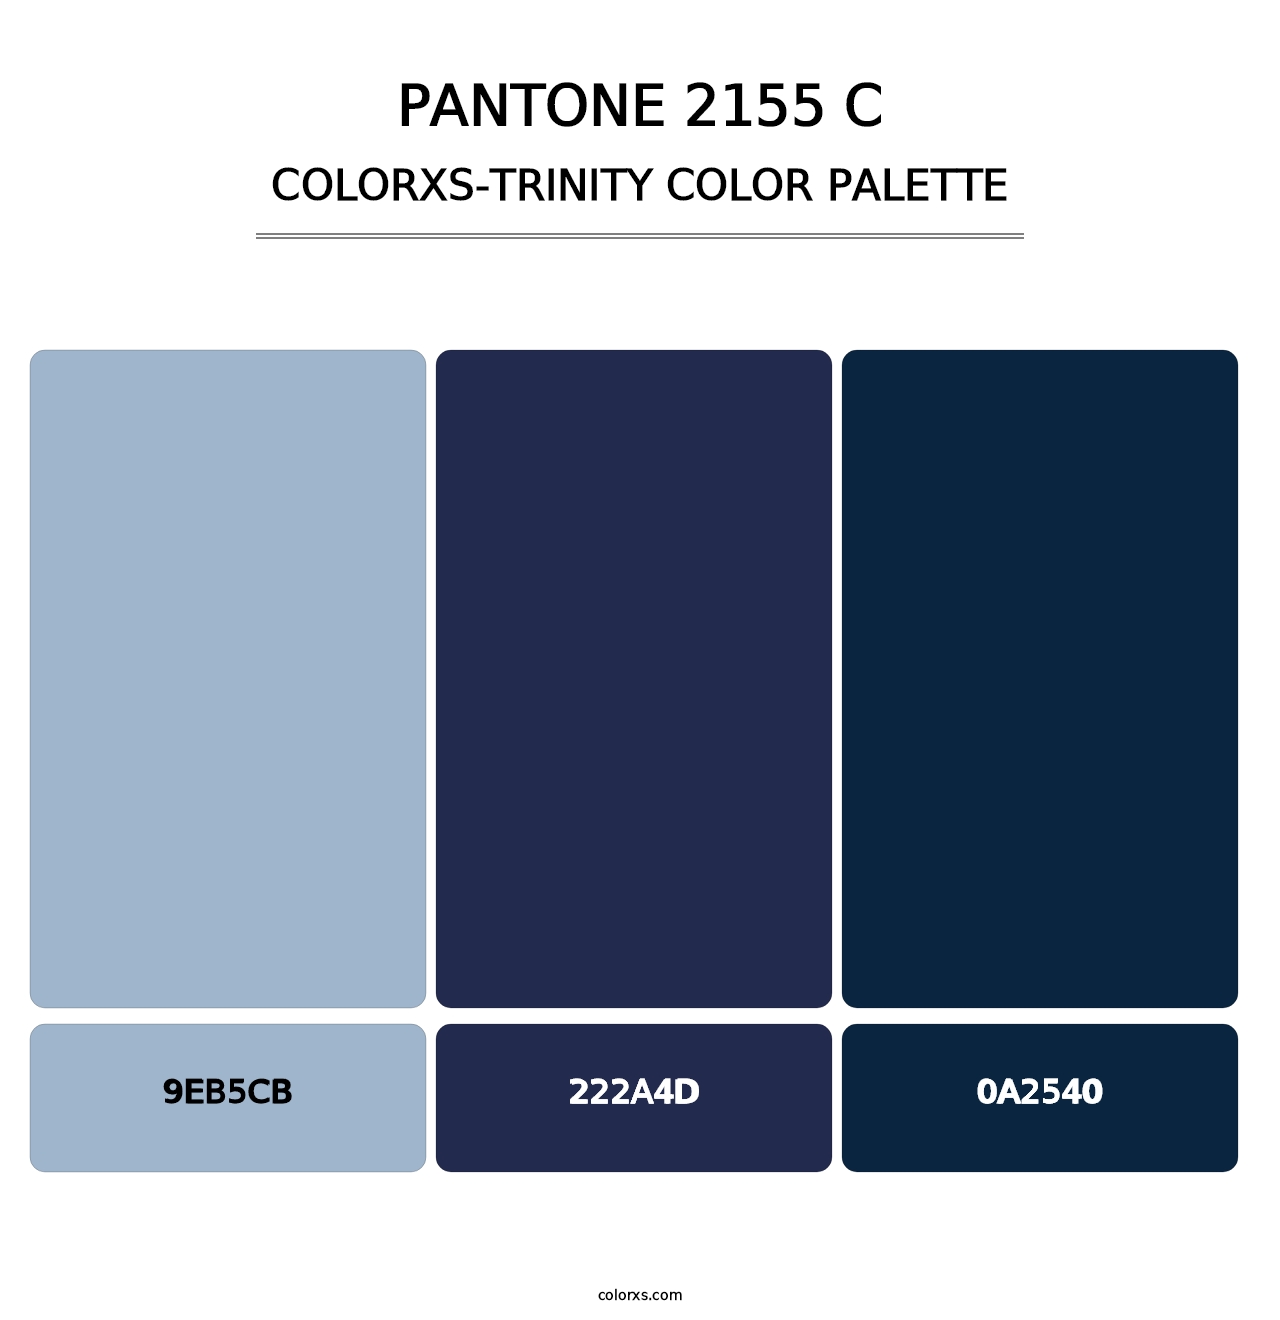 PANTONE 2155 C - Colorxs Trinity Palette